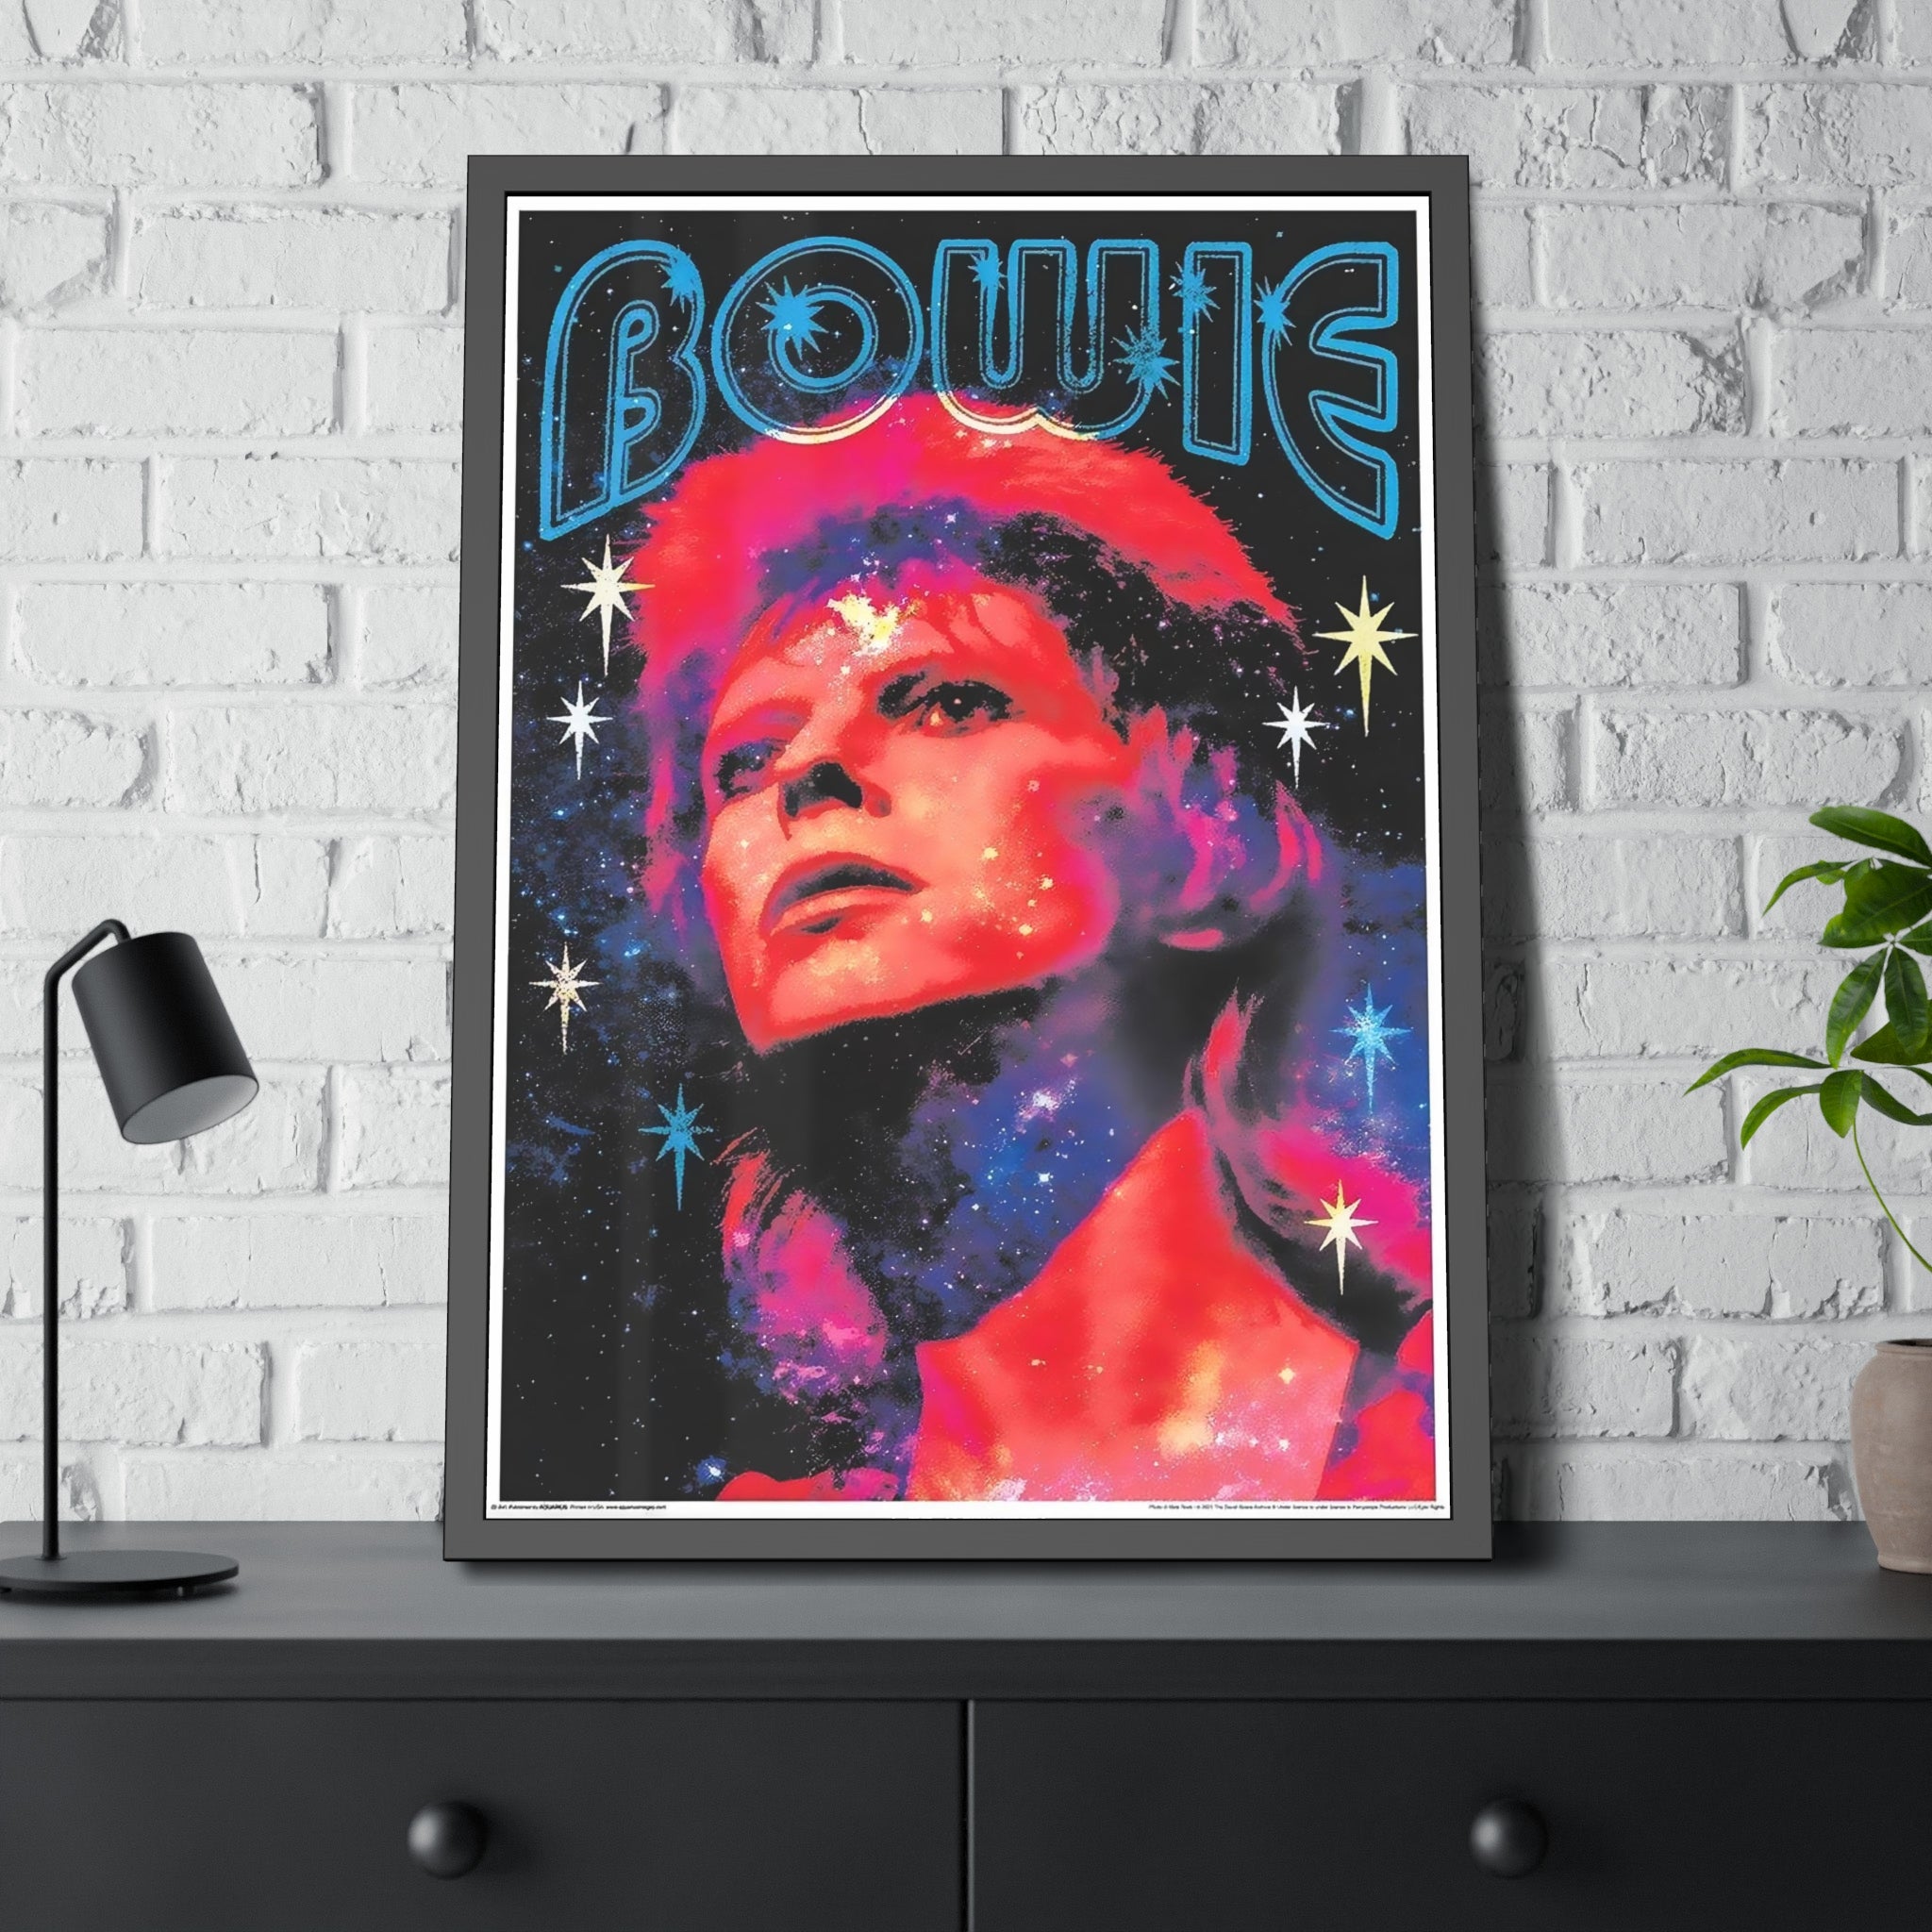 David Bowie Concert Poster